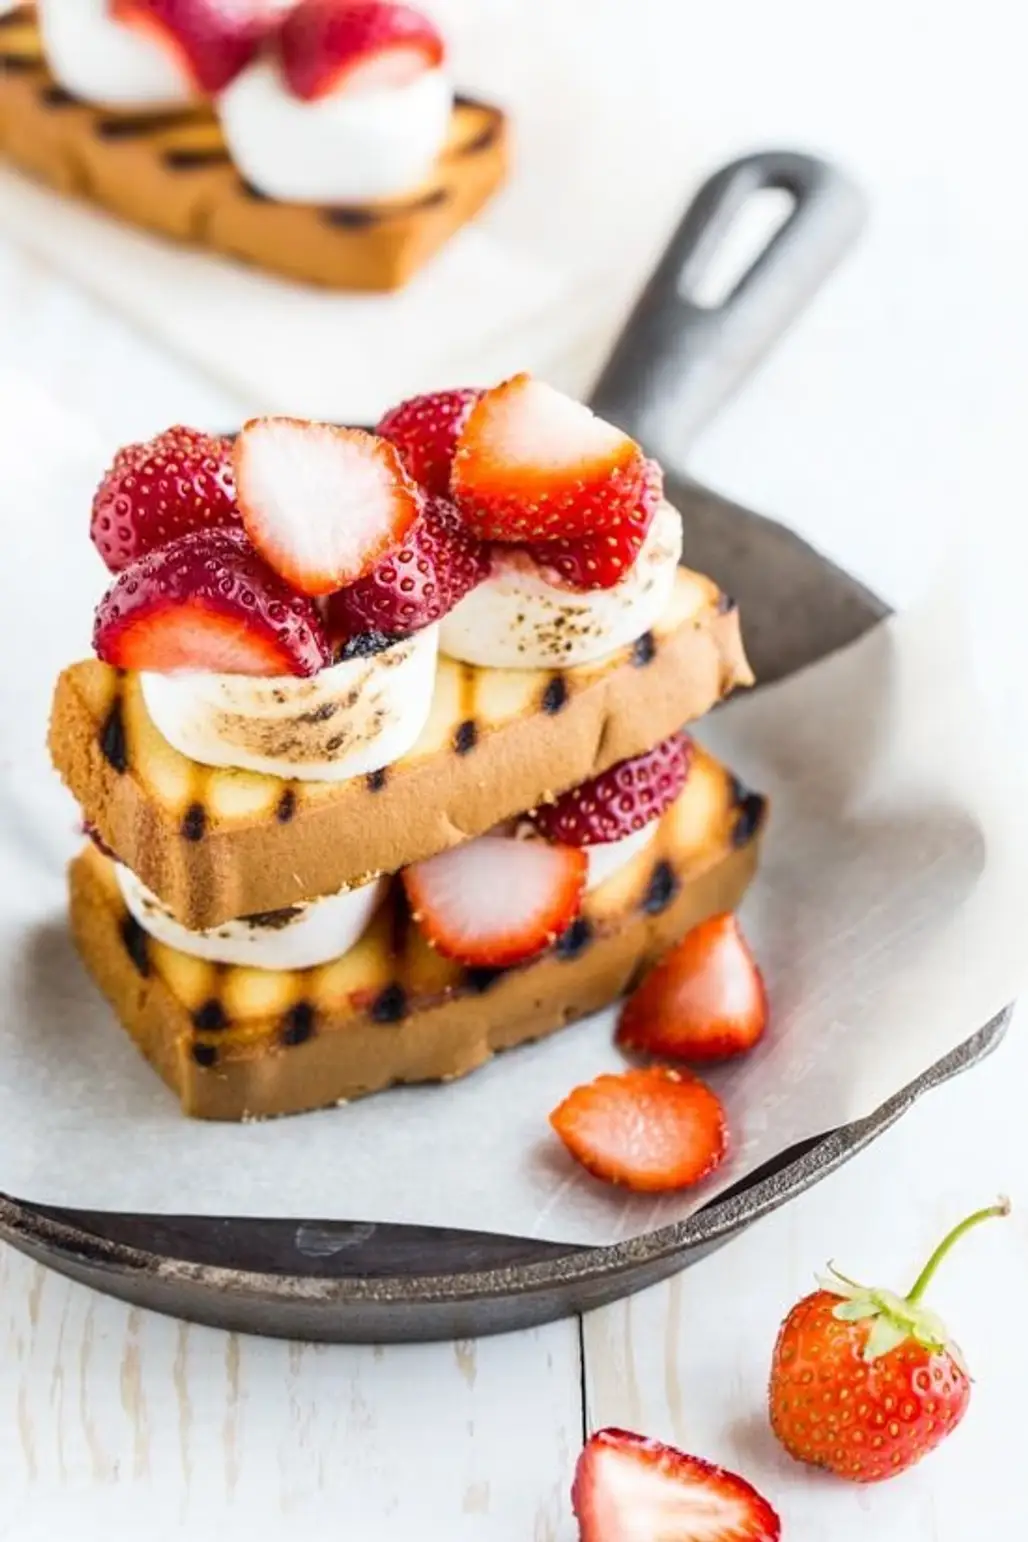 Marshmallow Strawberry Shortcake